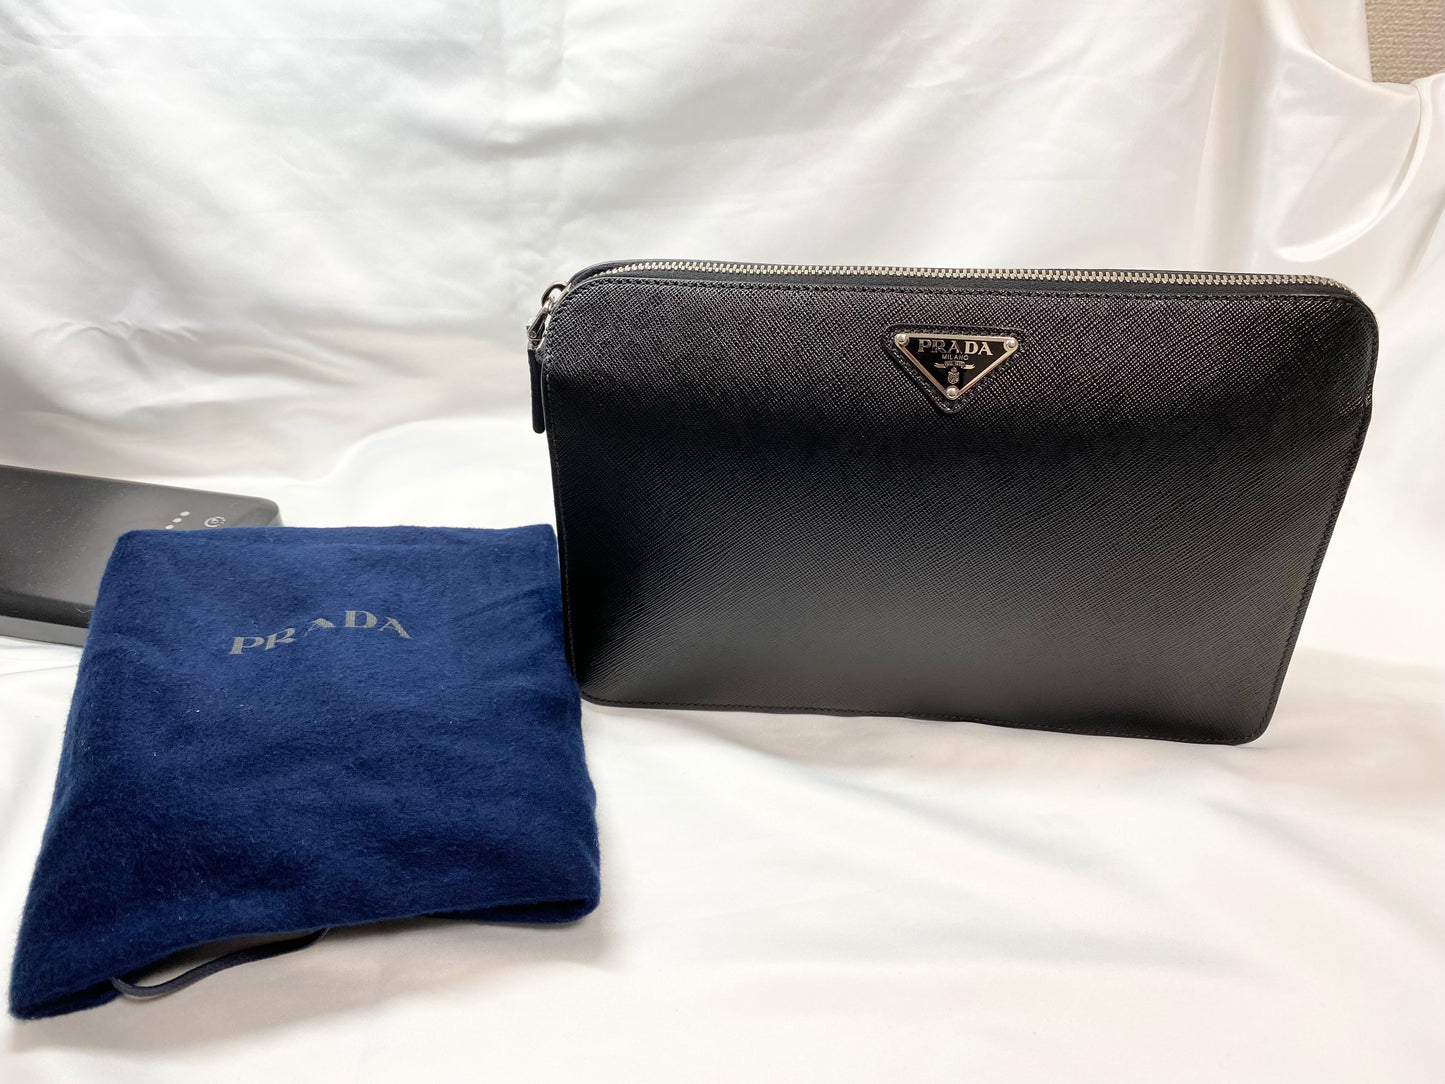 Beautiful Prada PRADA Saffiano Leather Clutch Bag Black